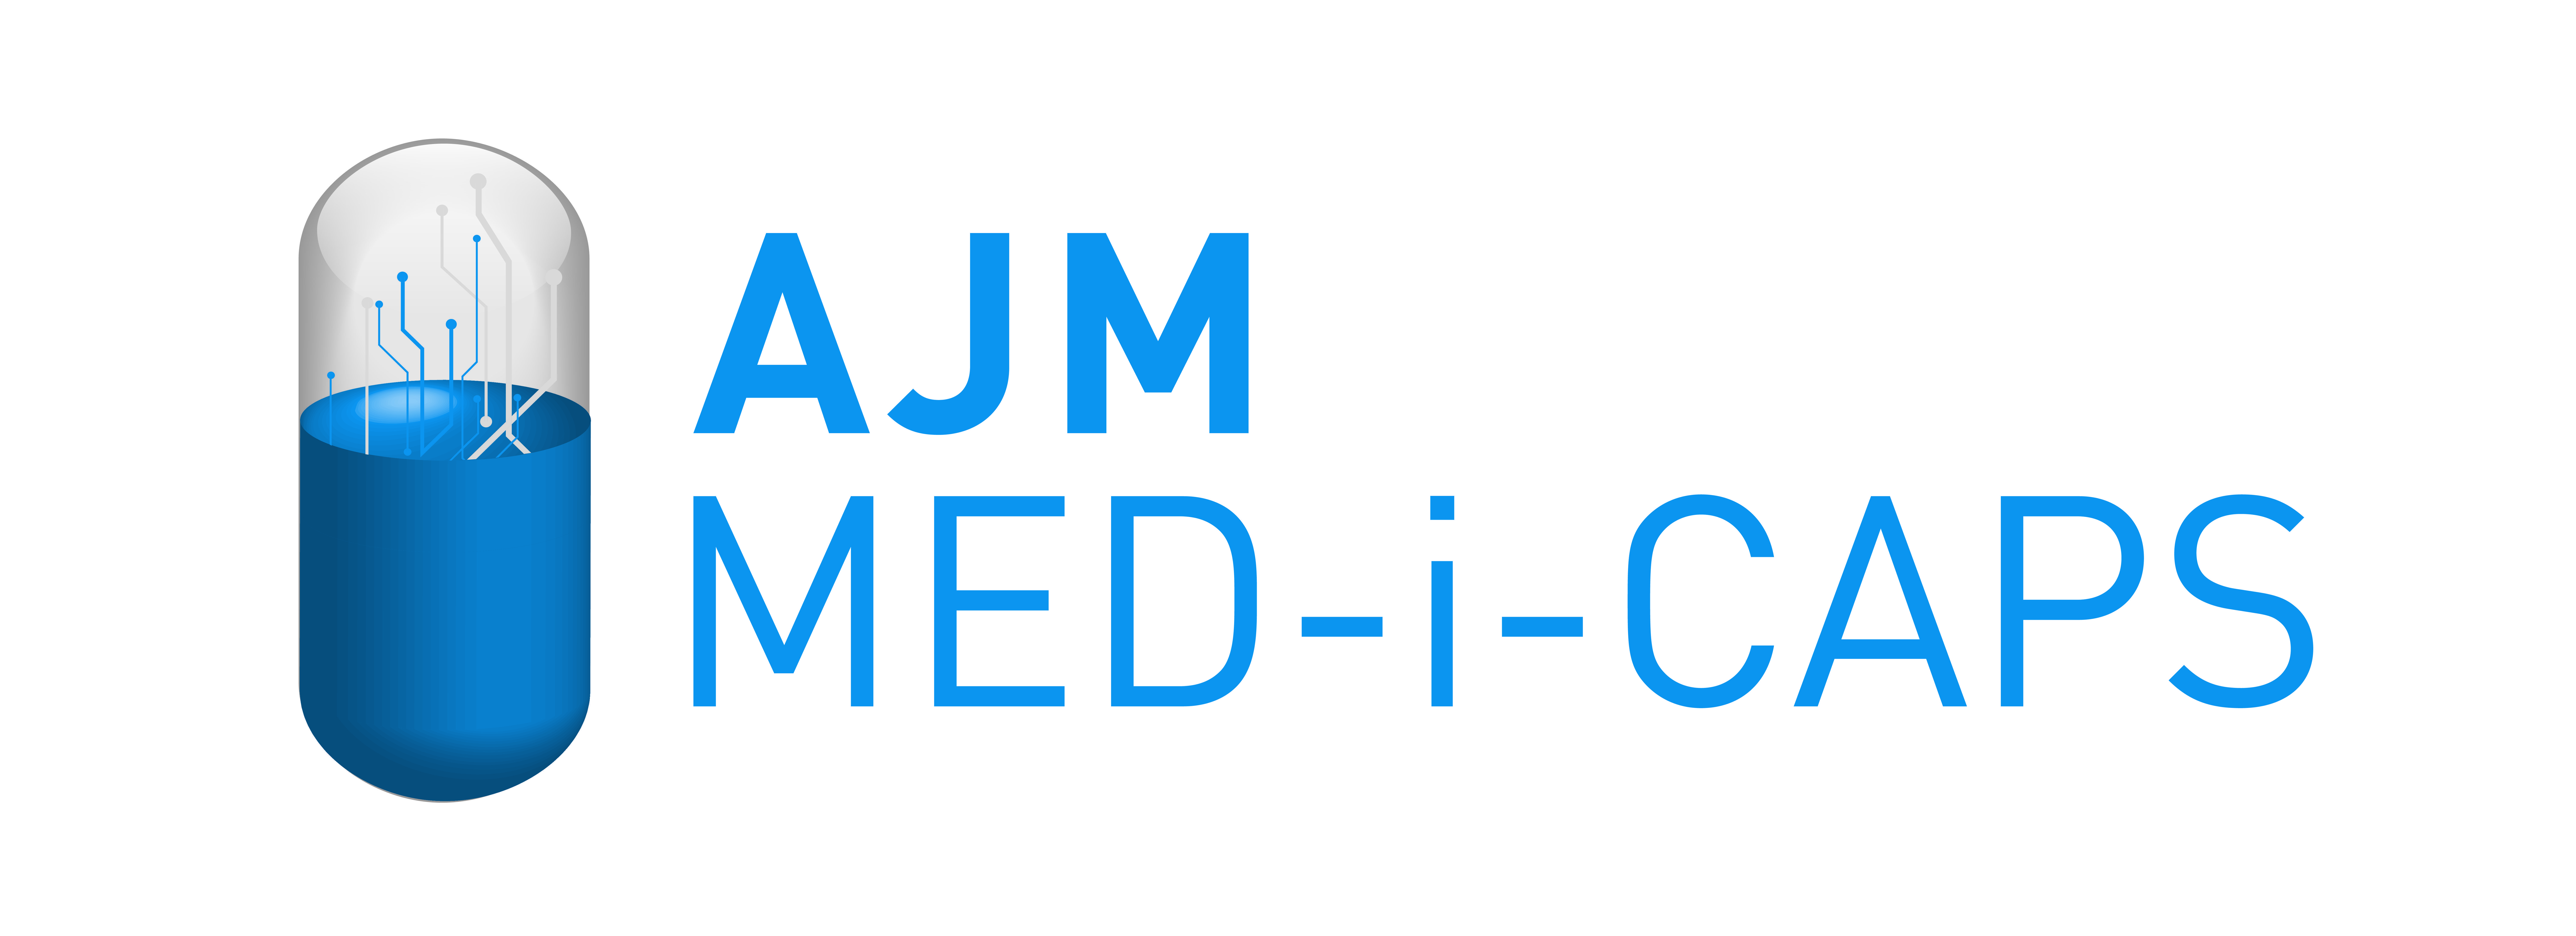 AJM Logo 005